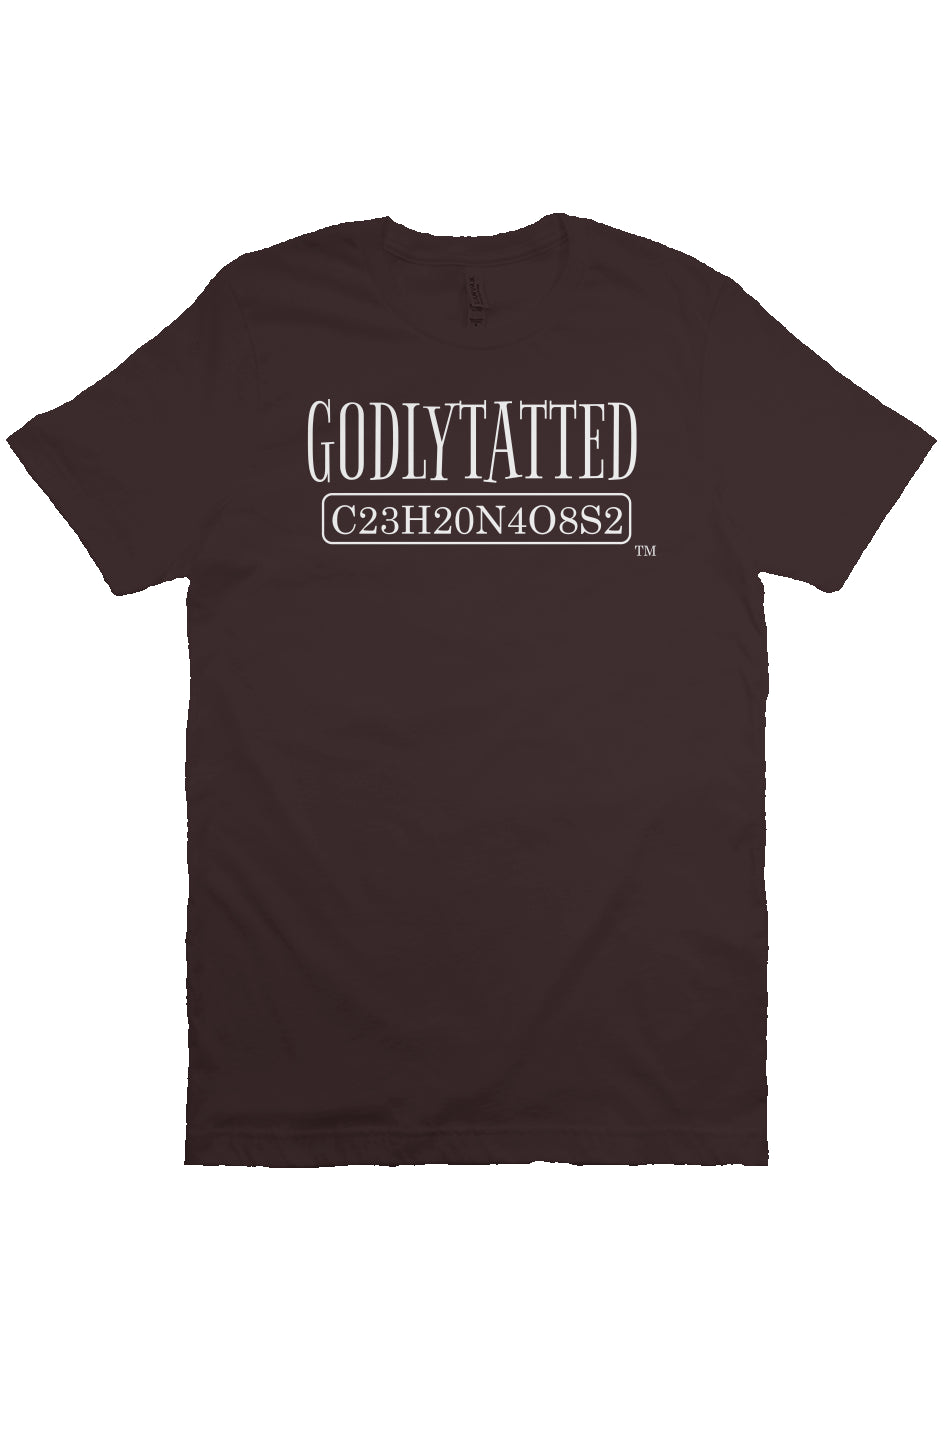 Godlytatted - Adult - Oxblood Black - White Logo